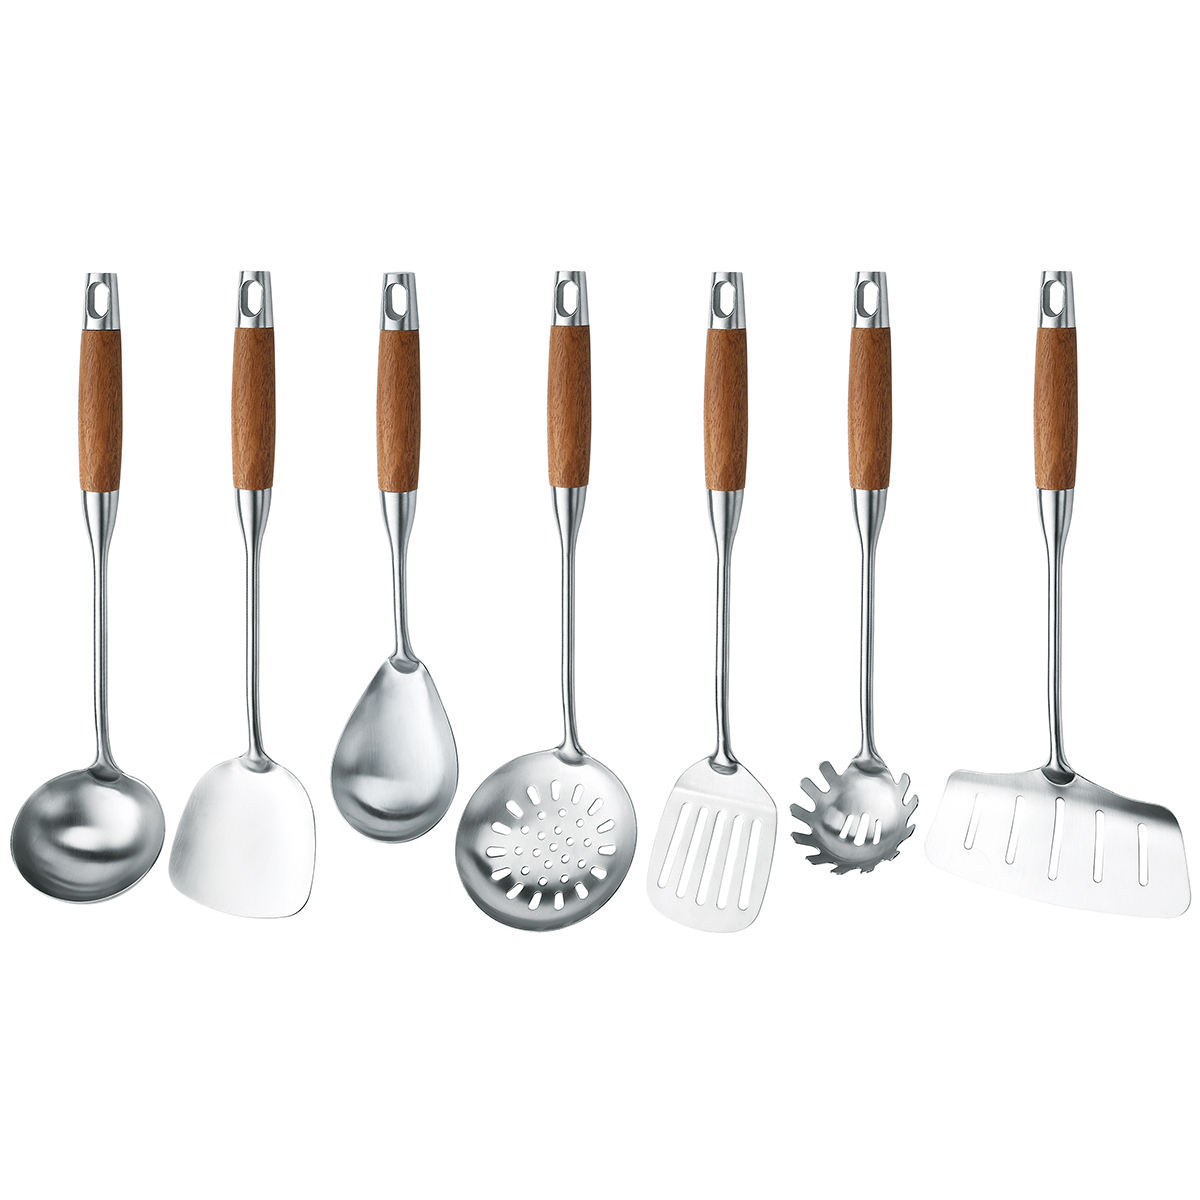 Stainless Steel 304 Wooden Handle Kitchenware Tools Utensils Set